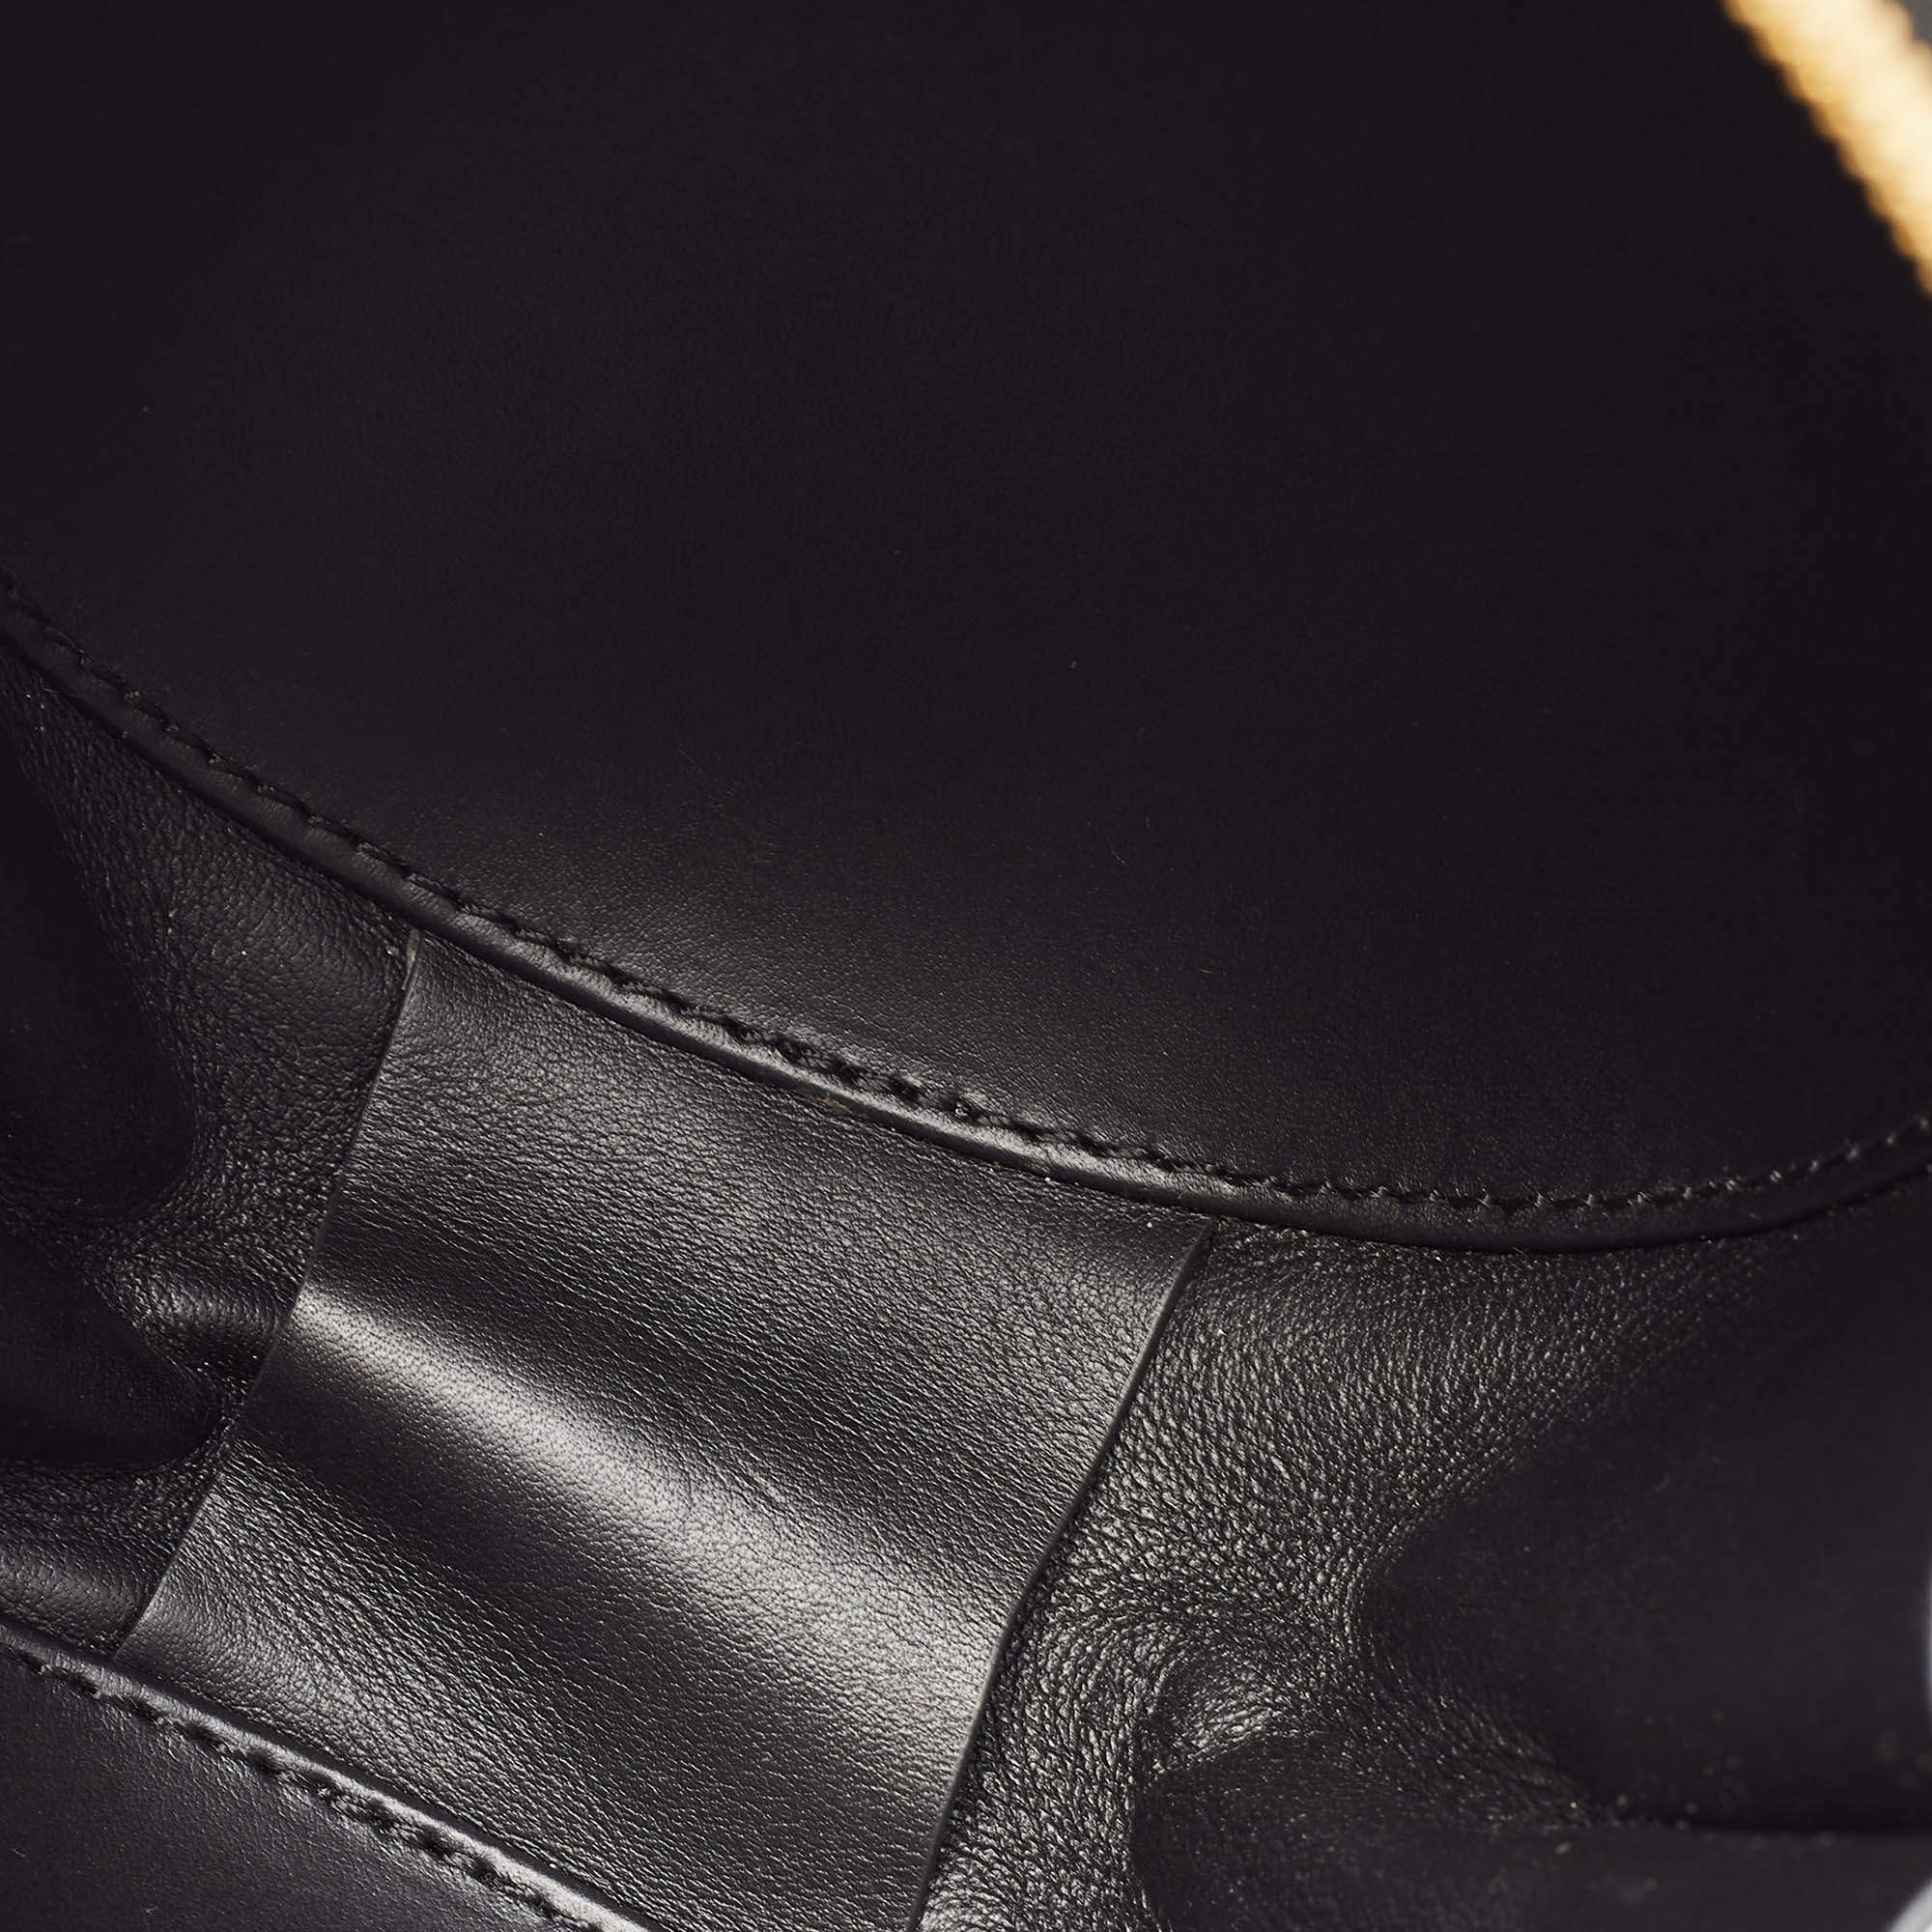 Louis Vuitton Black Monogram Canvas and Leather LV Egg Bag